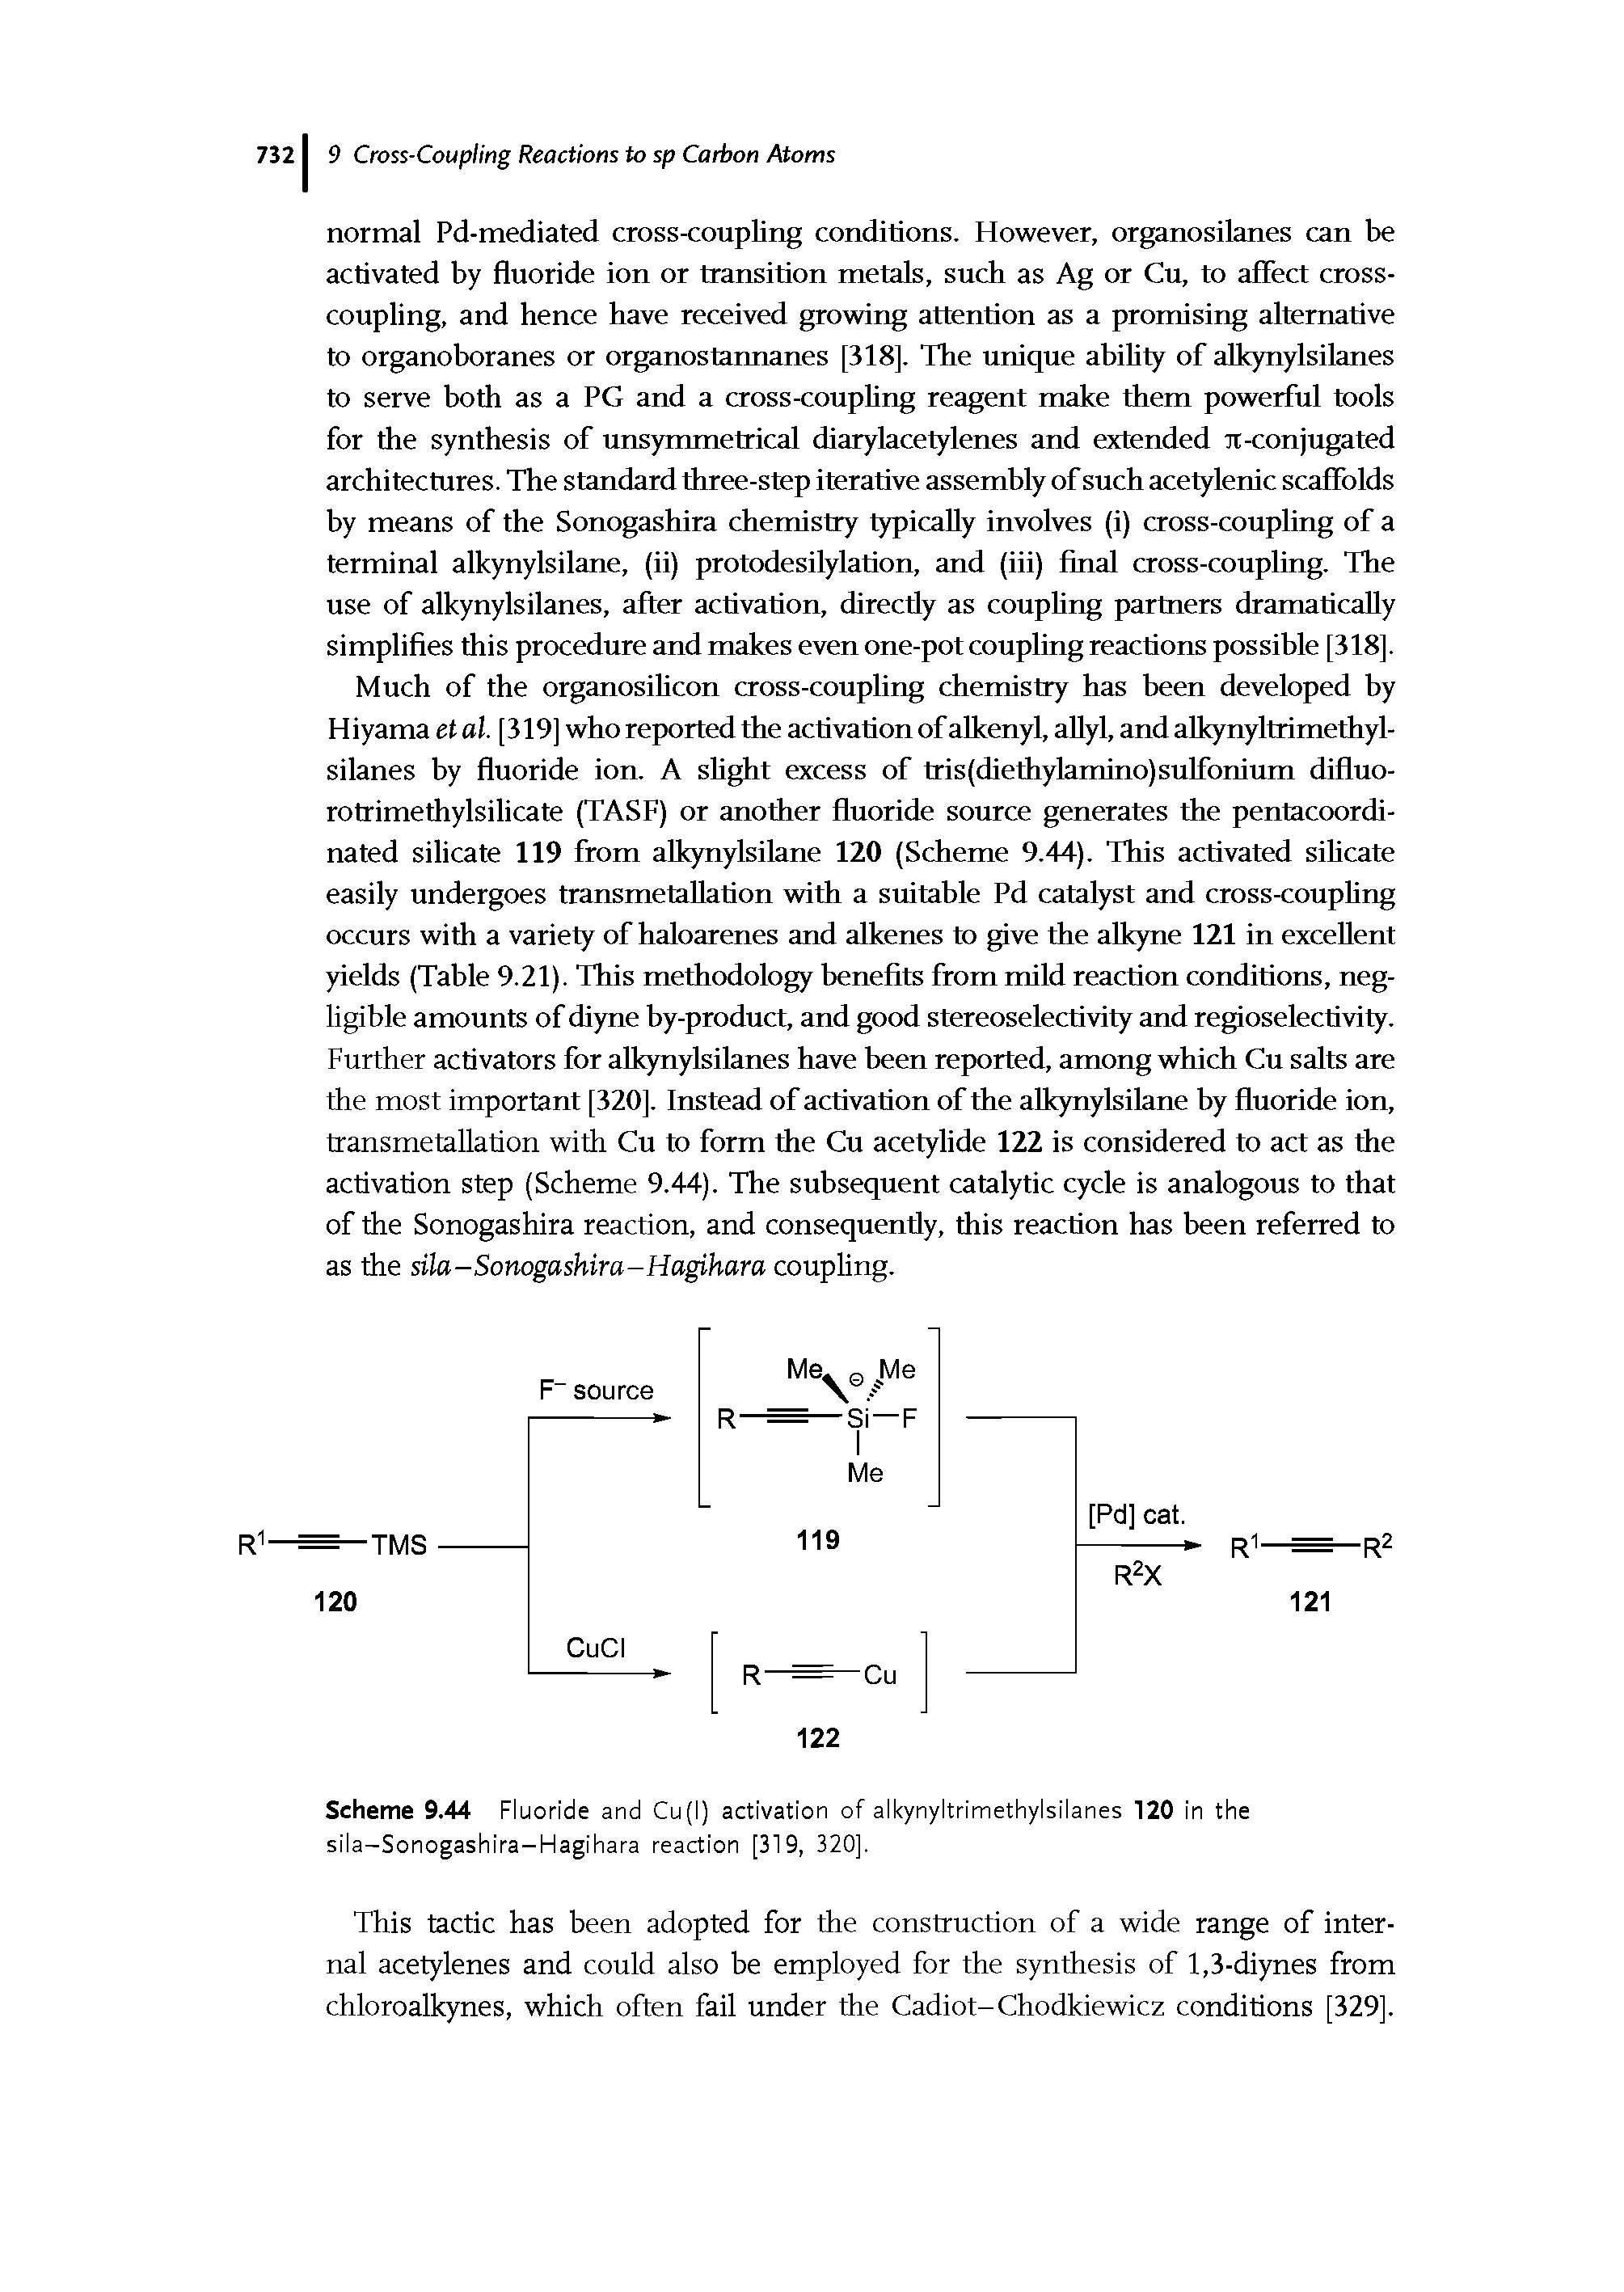 Scheme 9.44 Fluoride and Cu(l) activation of alkynyltrimethylsilanes 120 in the sila-Sonogashira-Hagihara reaction [319, 320].